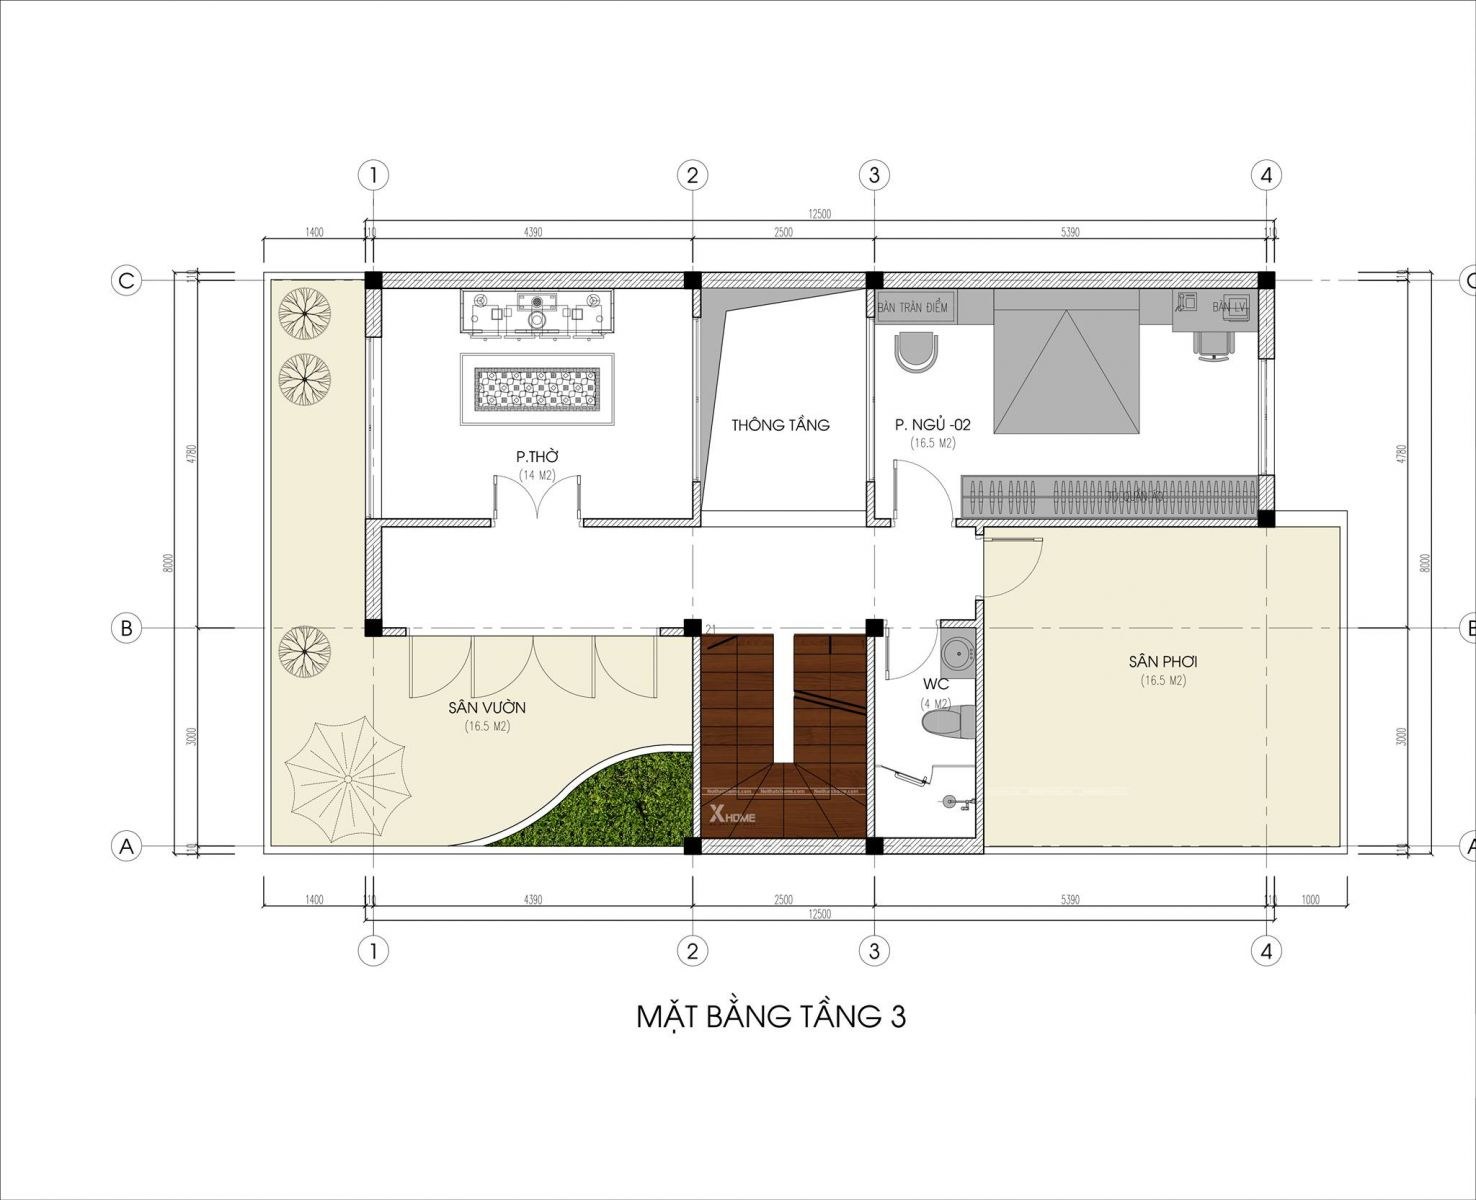 design-of-house-3-tang-mai-bang-6